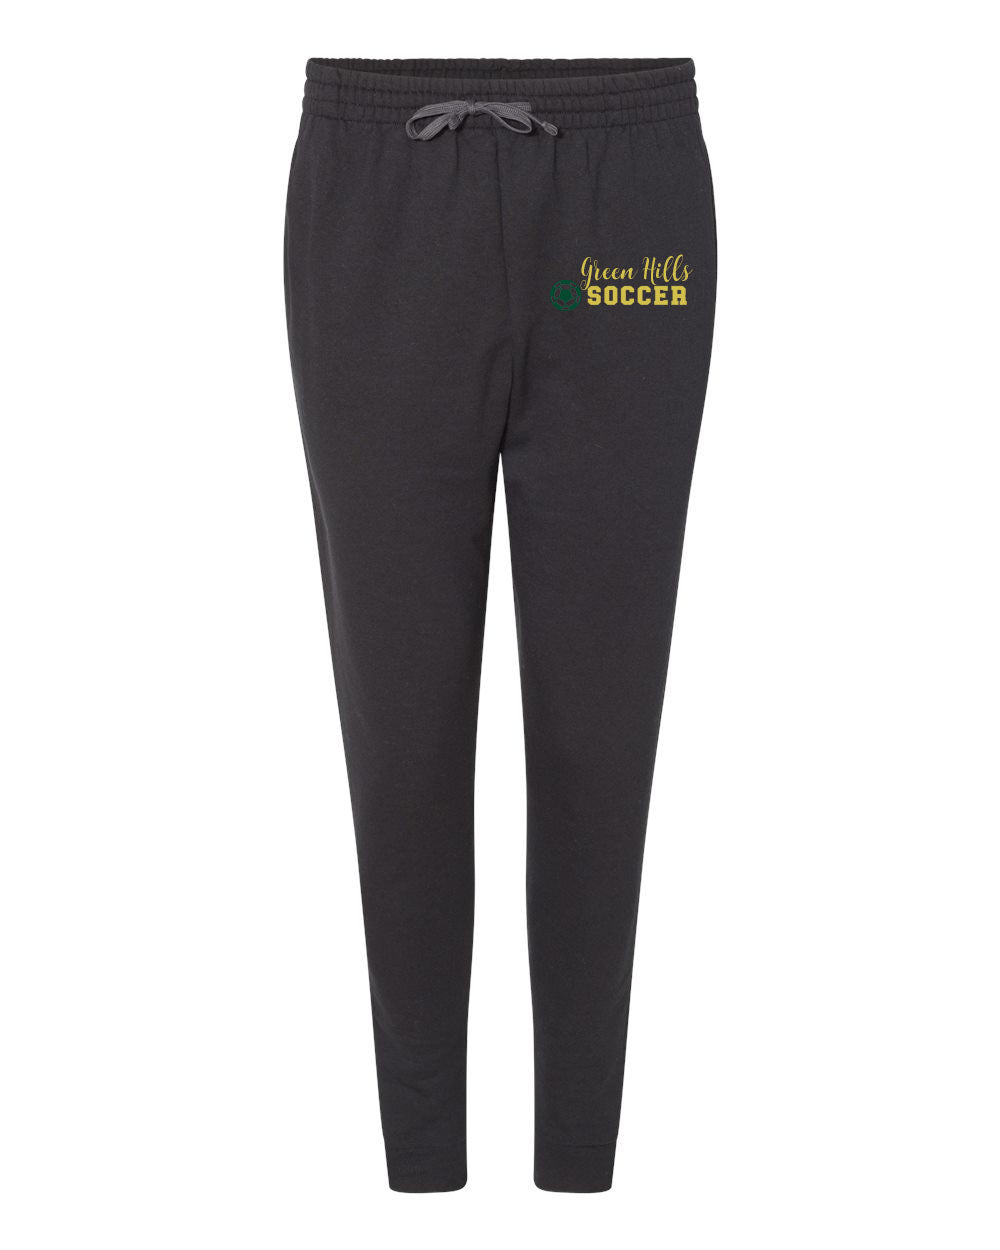 Green Hills Soccer design 3 Sweatpants